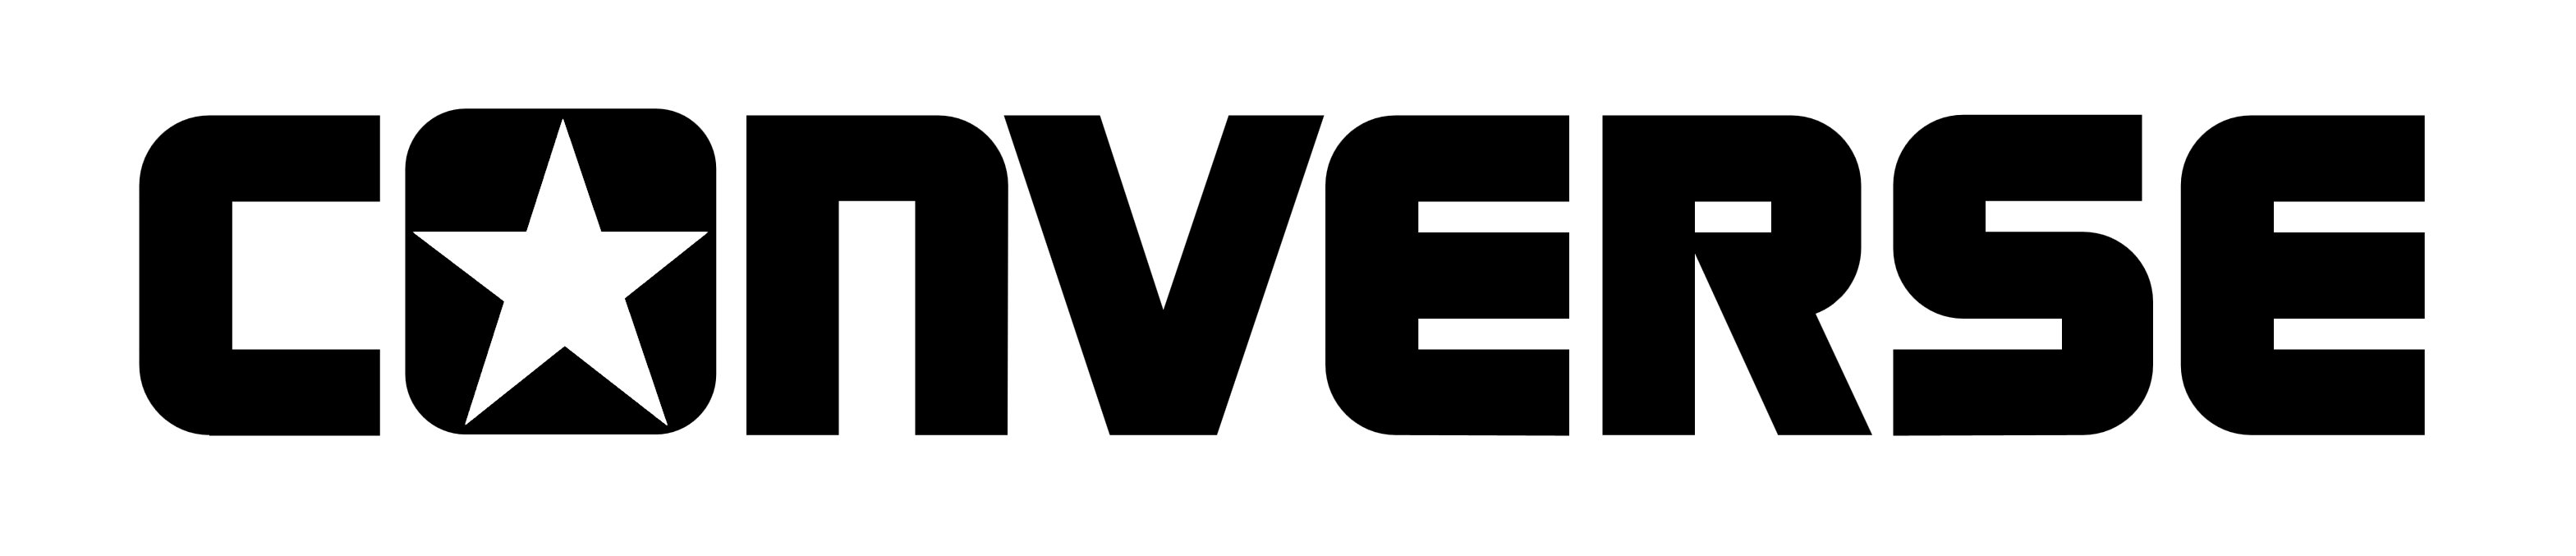 Converse logo, logotype